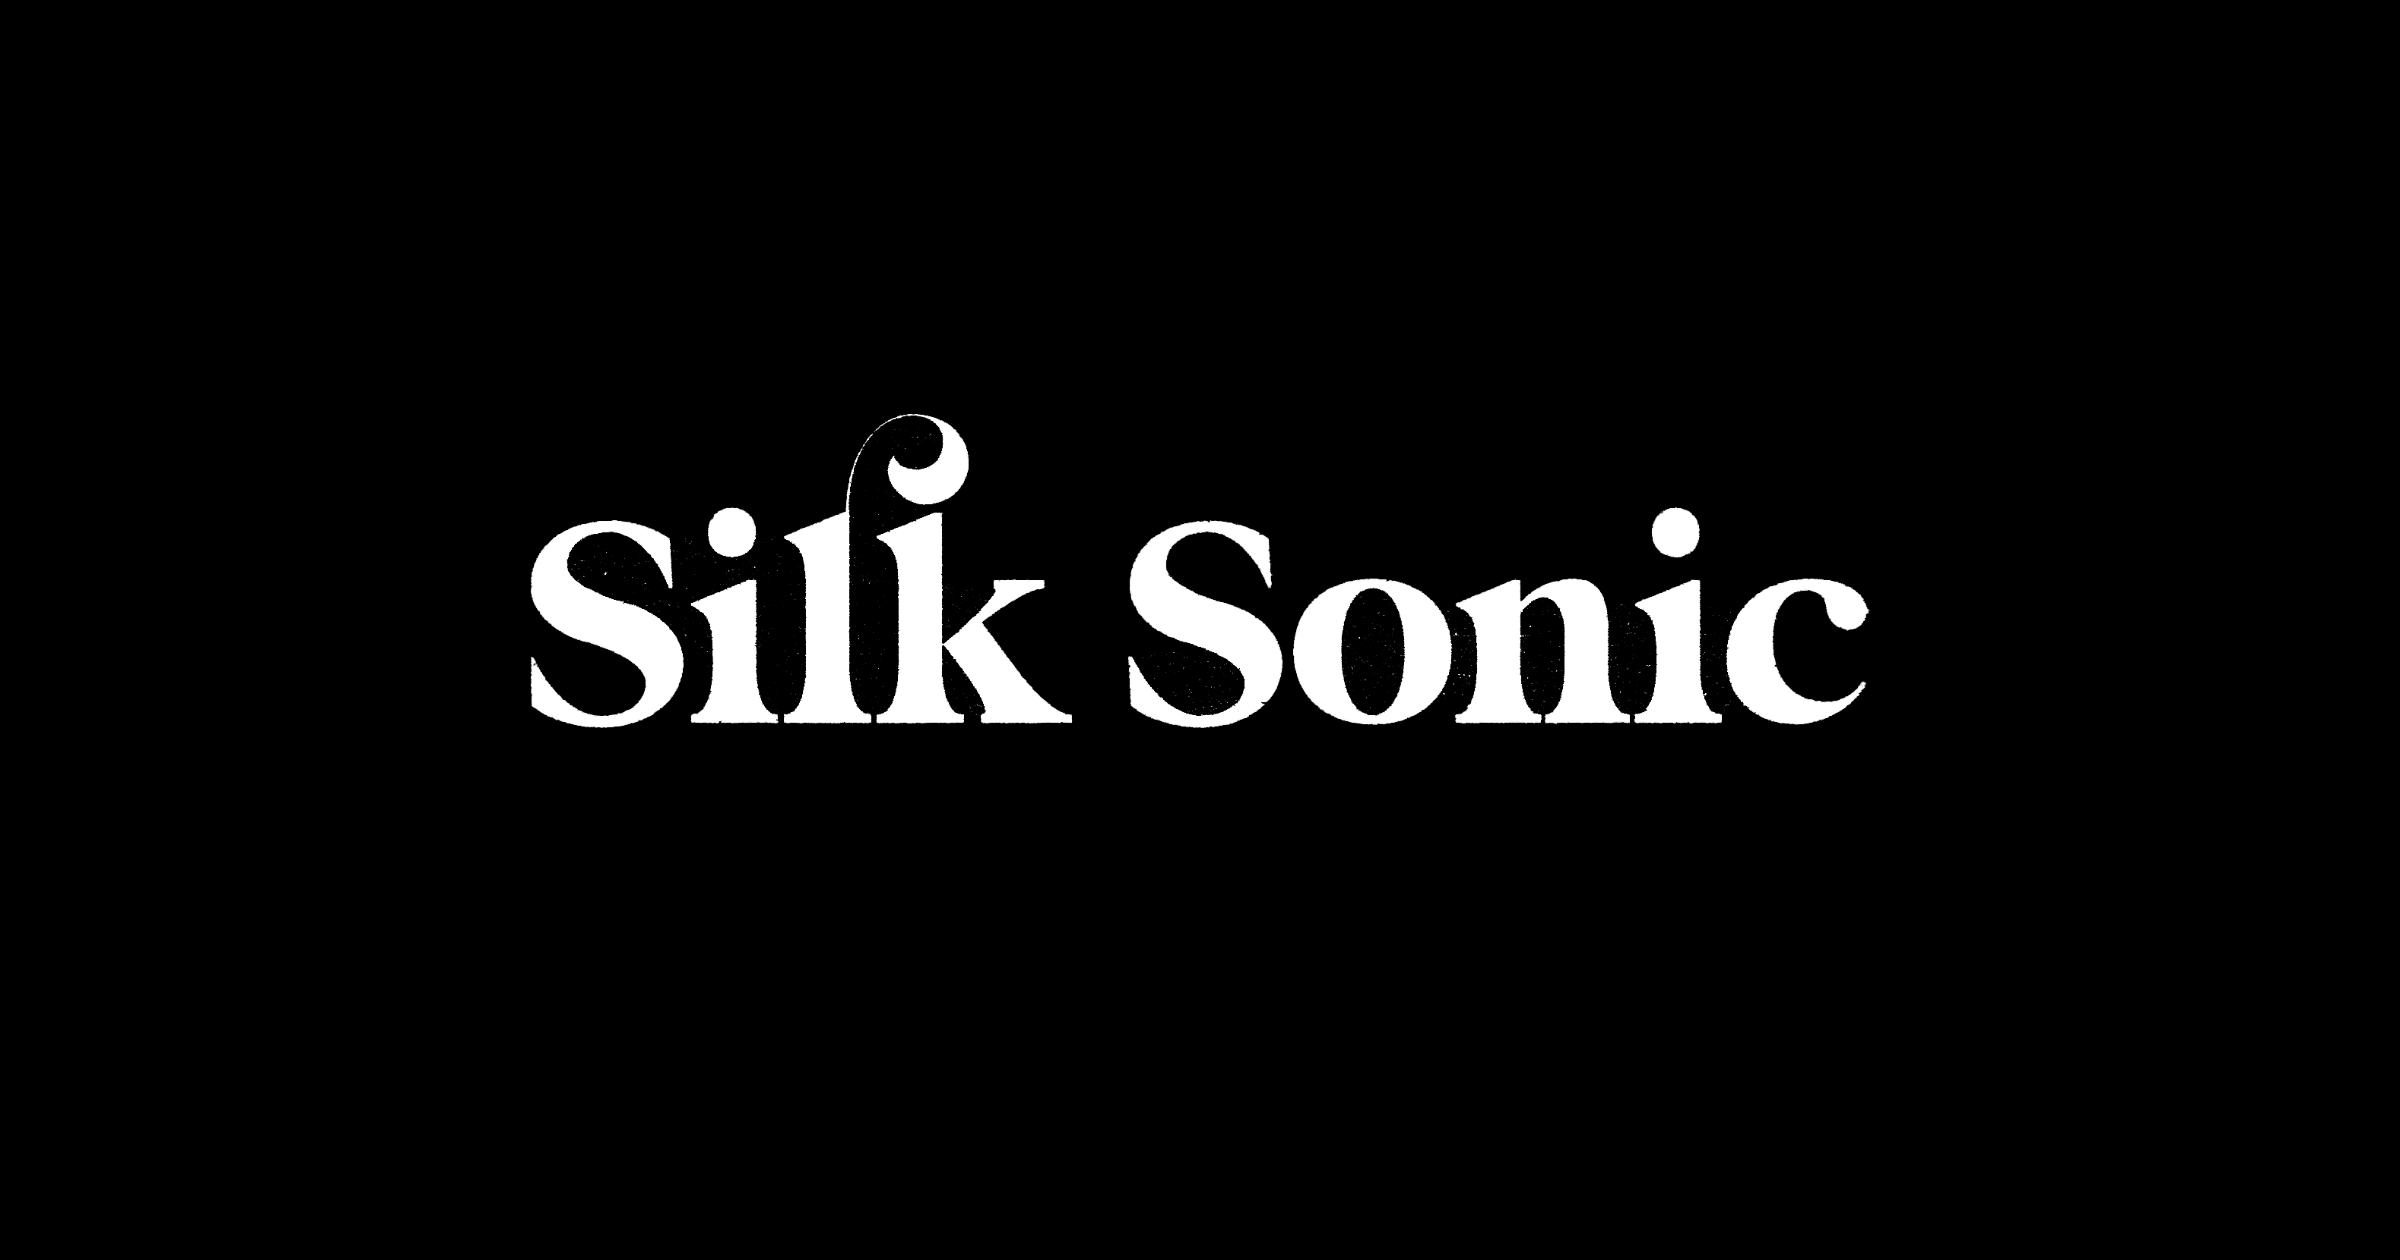 Silk sonic